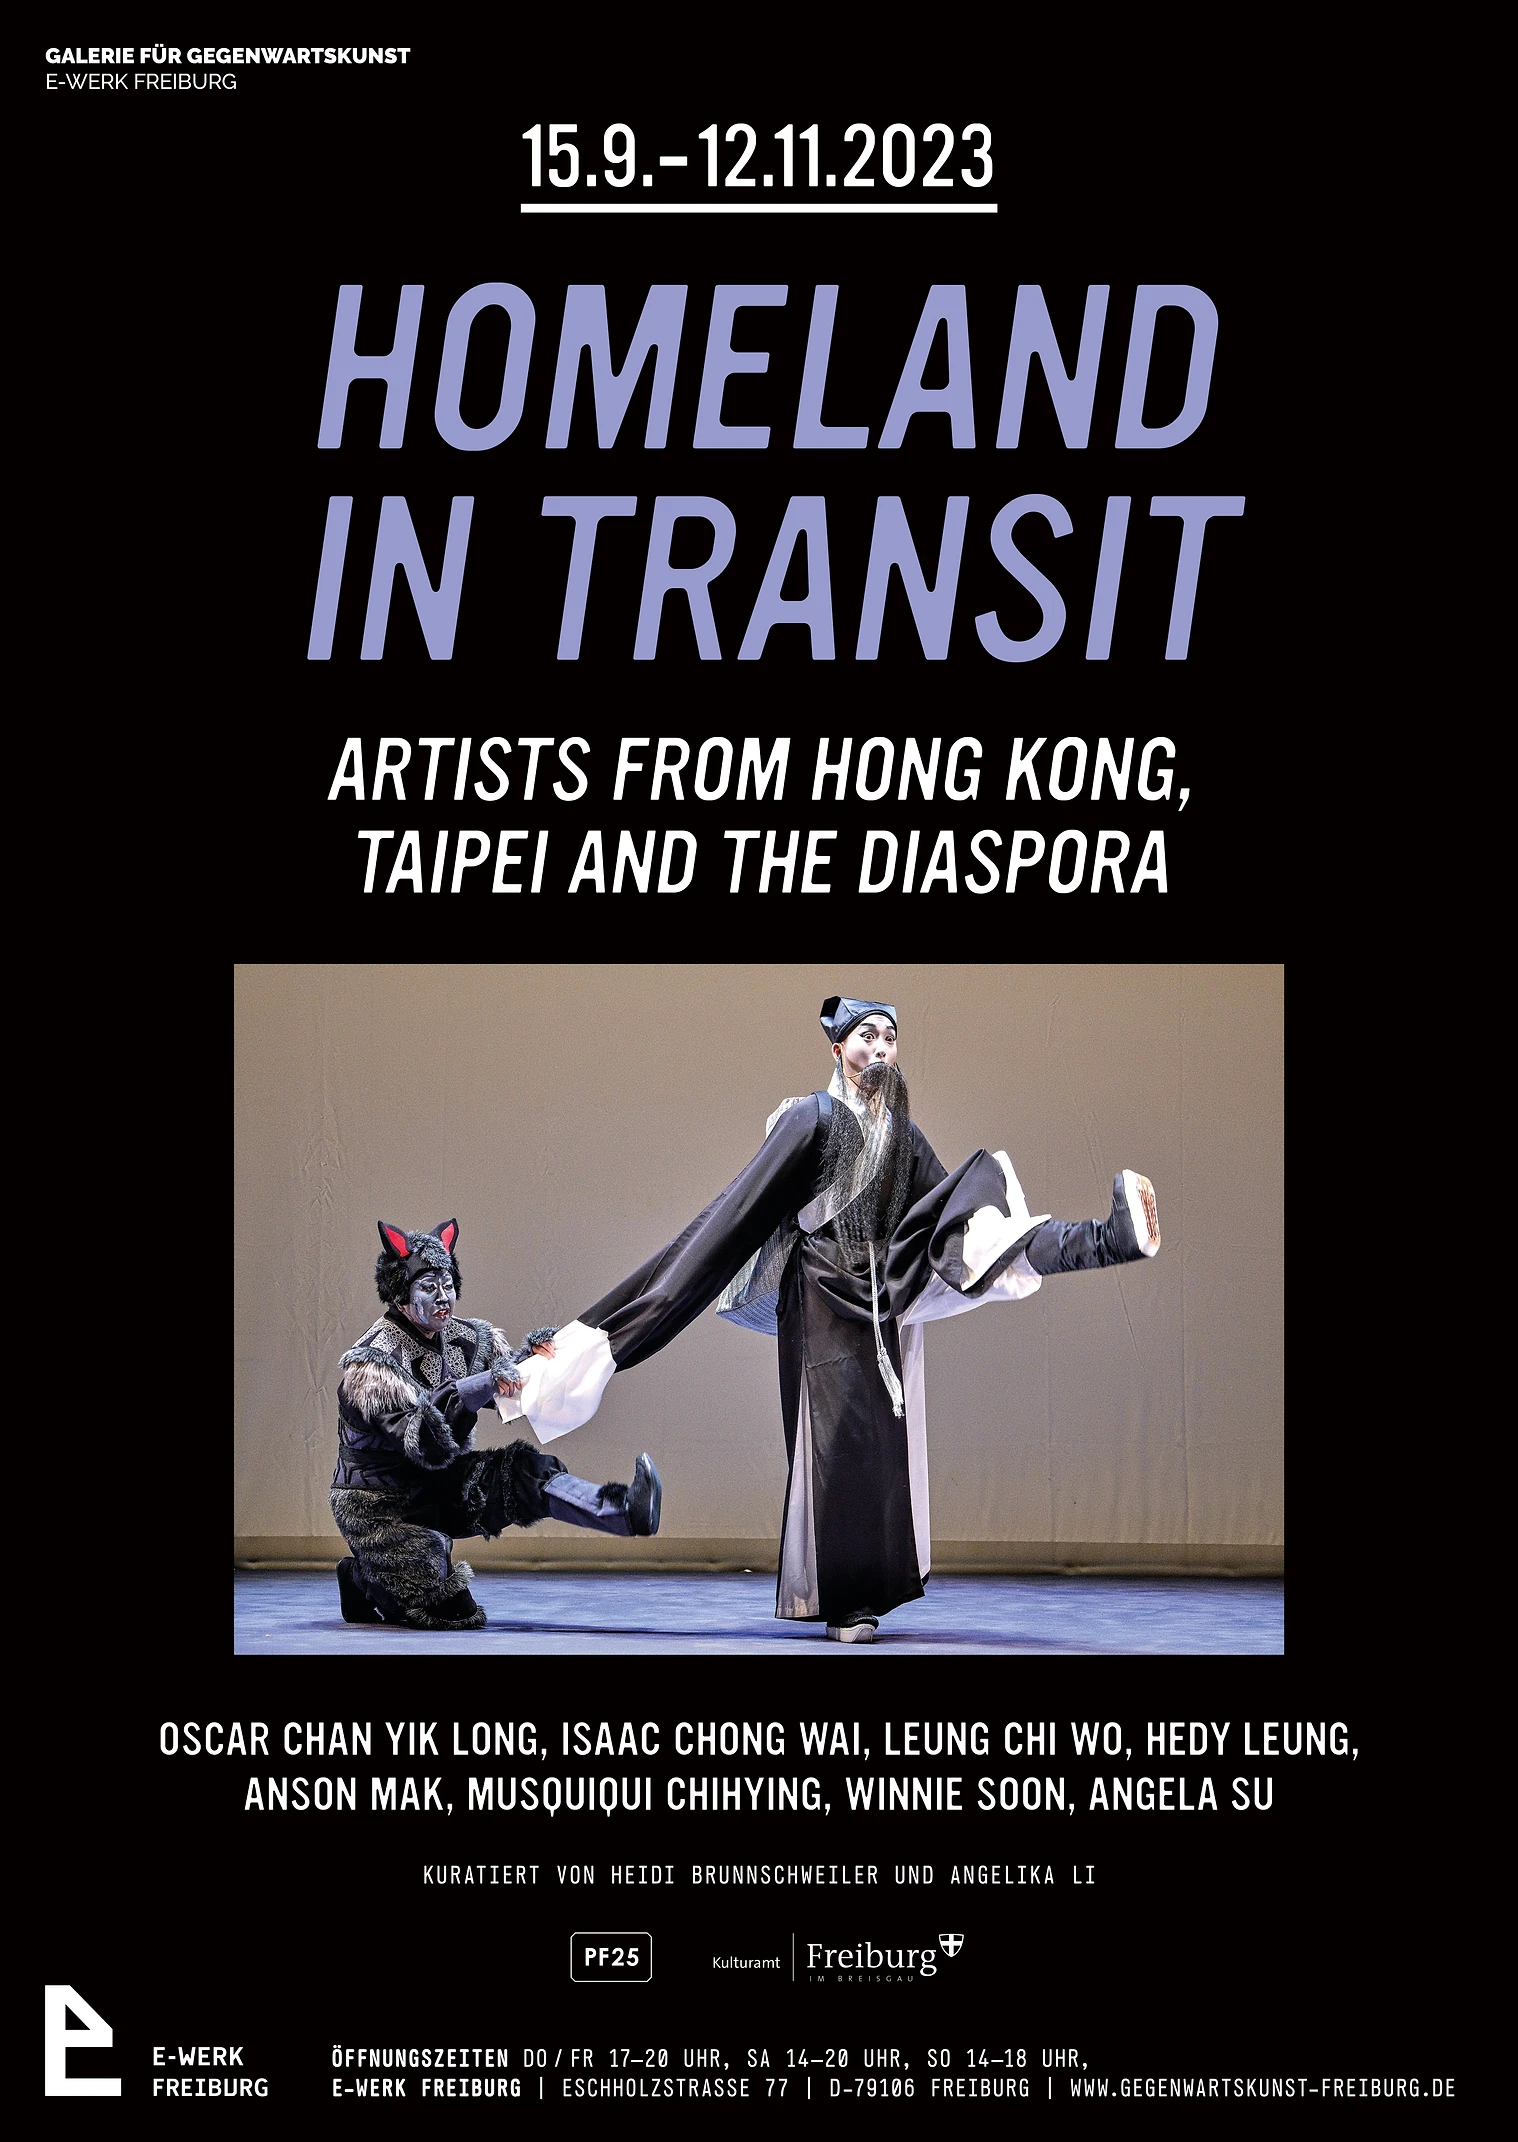 徐世琪、莊偉、梁志和參與群展 “Homeland in Transit | Artists from Hong Kong, Taipei and the Diaspora”